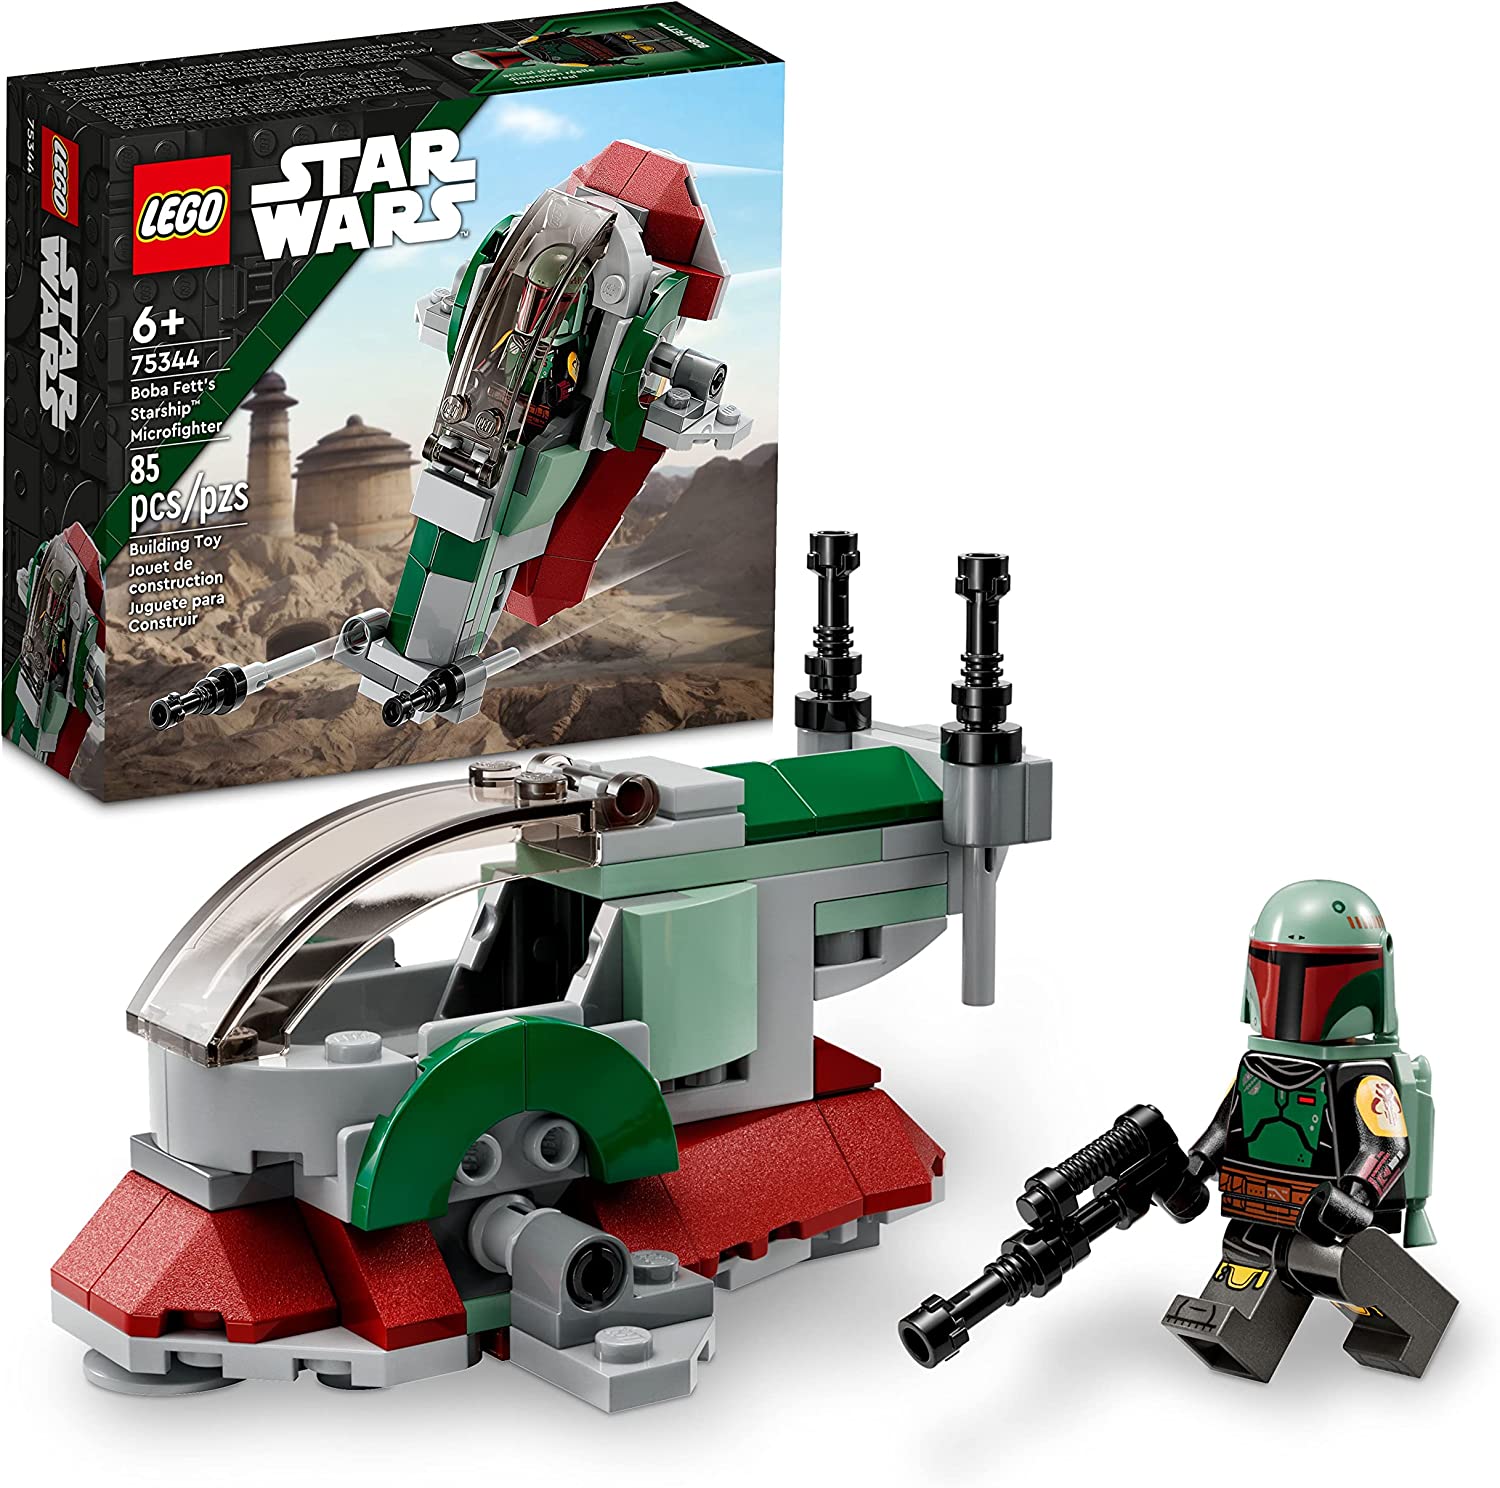 LEGO Star Wars Boba Fett’s Starship Microfighter #75344